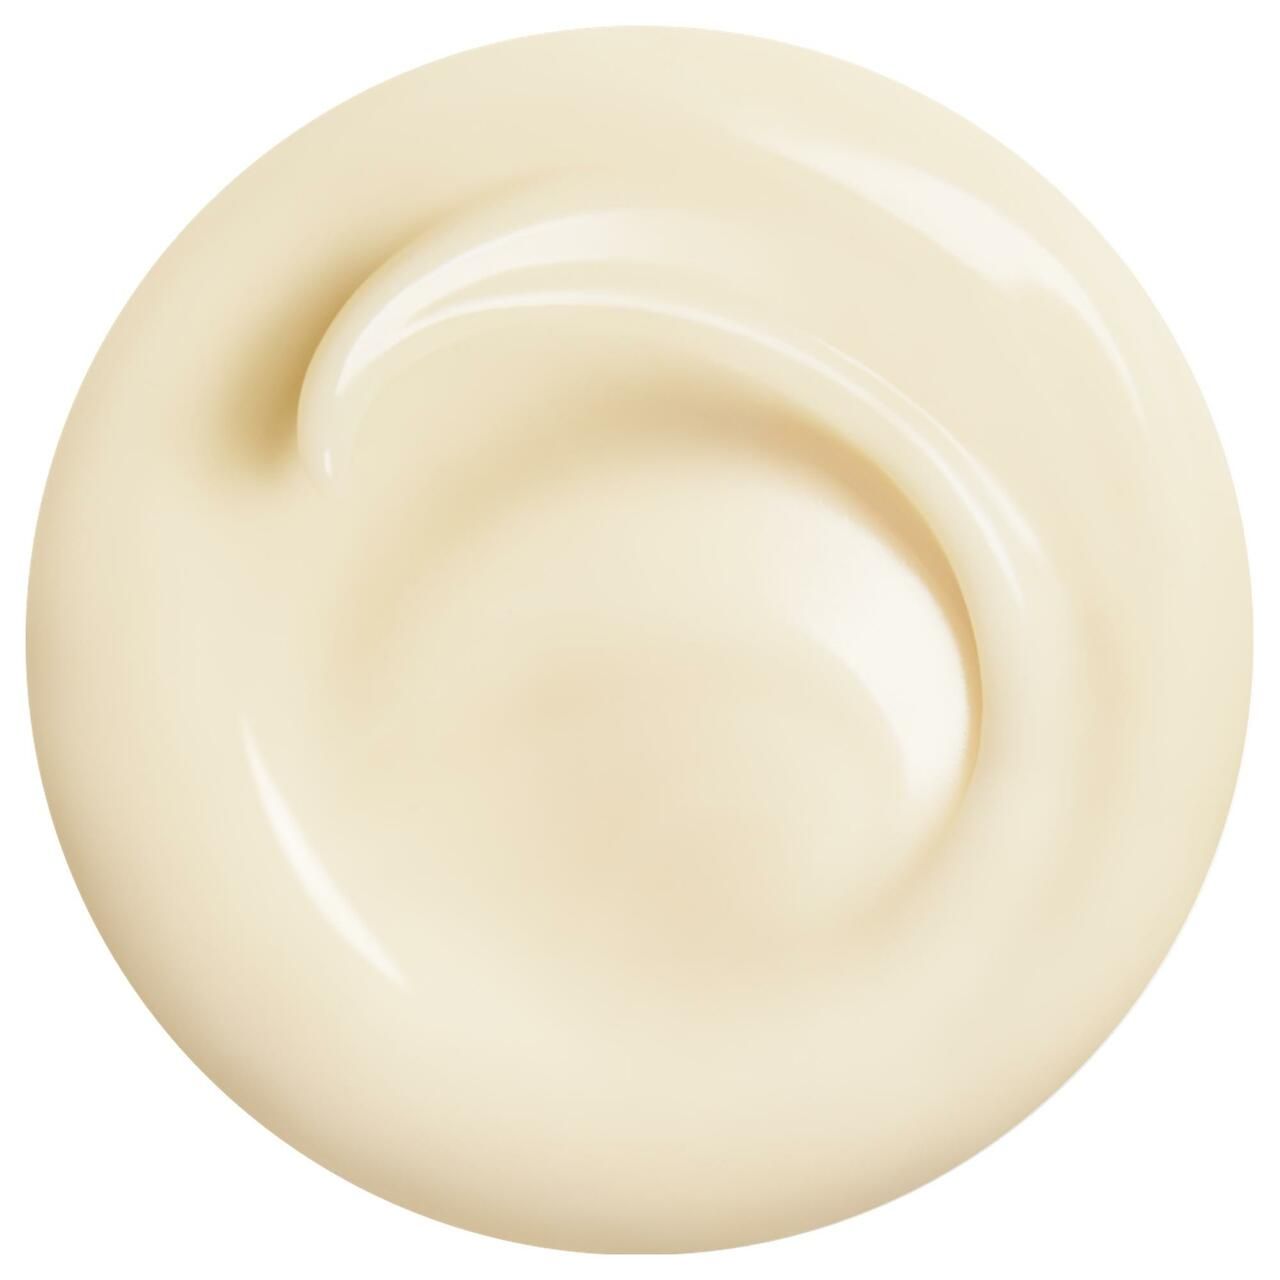 Shiseido, Benefiance Wrinkle Smoothing Cream